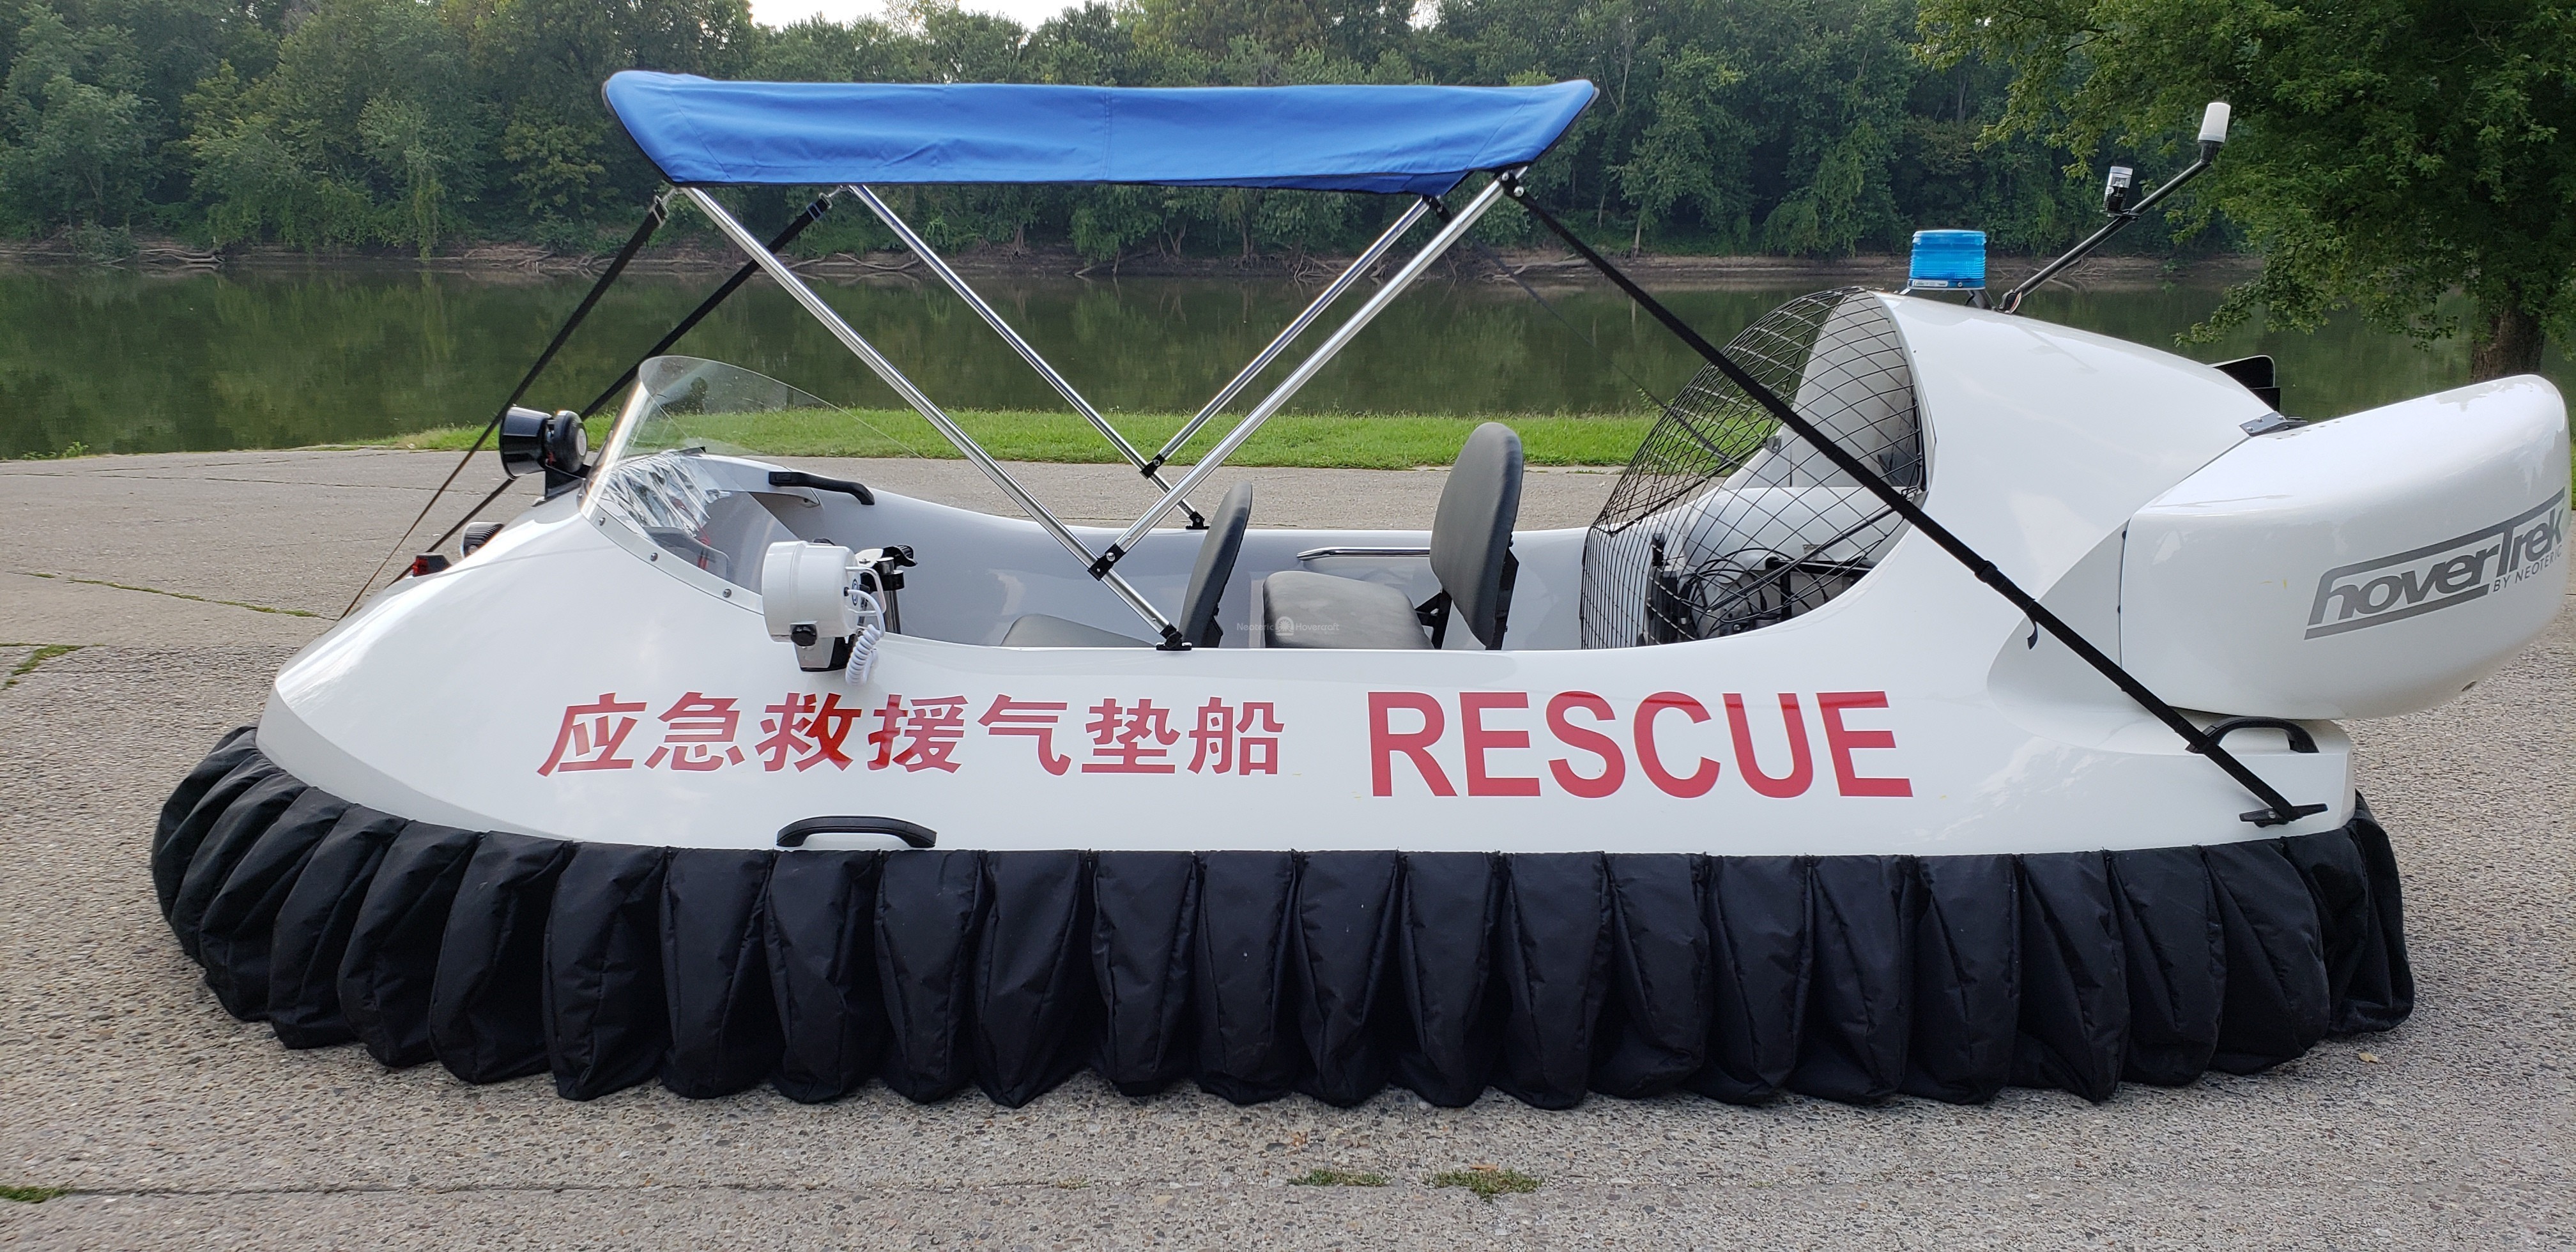 Rescue Hovercraft with a Bimini Top